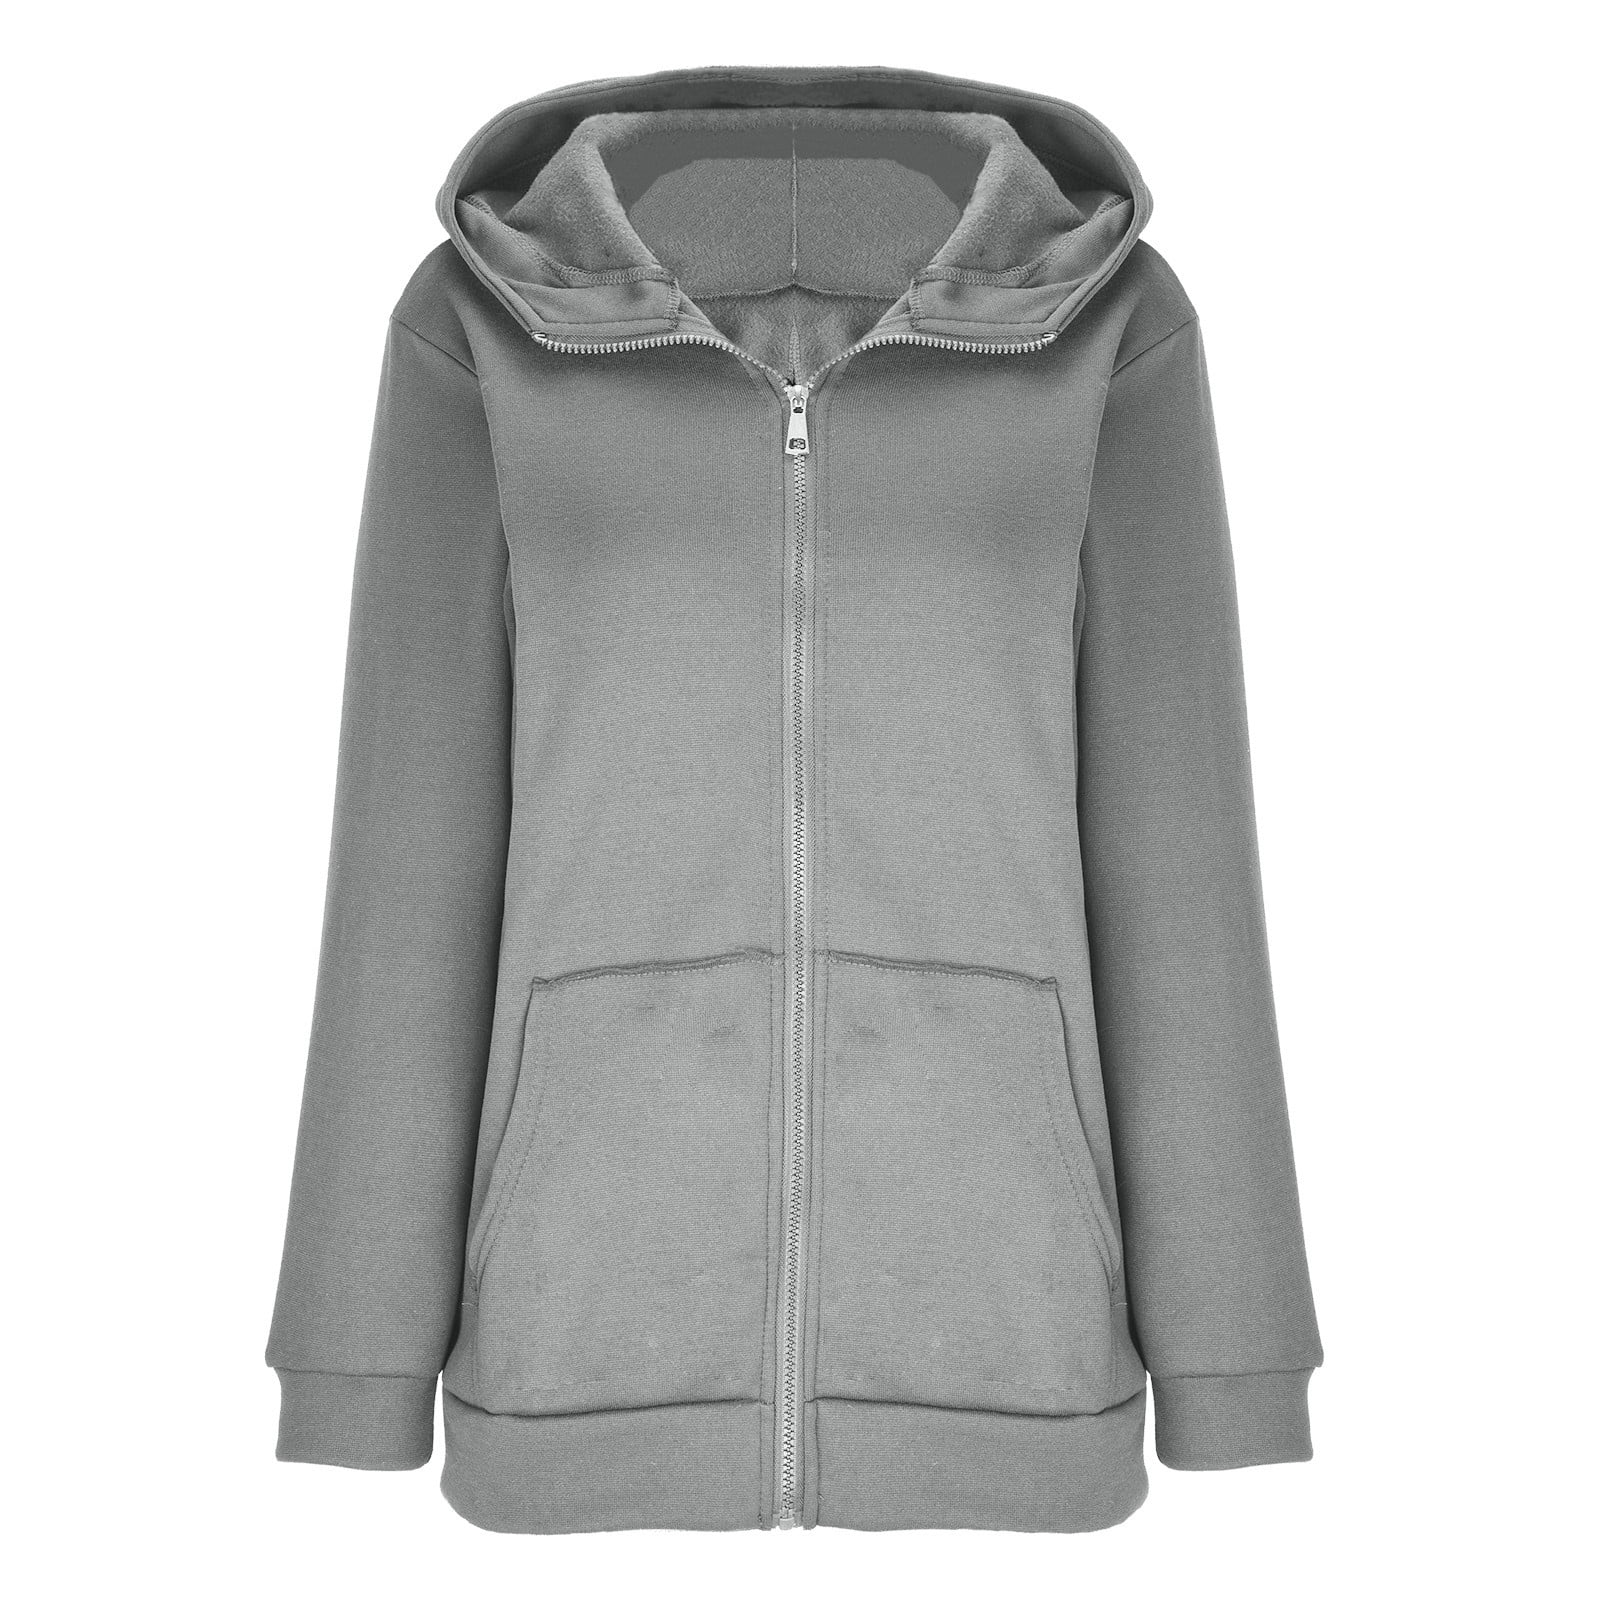  JJHAEVDY Women Coat Oversized Long Hoodies for Women Full-Zip  Long Jacket Casual Women's Jackets for Travel(1-Dark Gray,Small) : Sports &  Outdoors